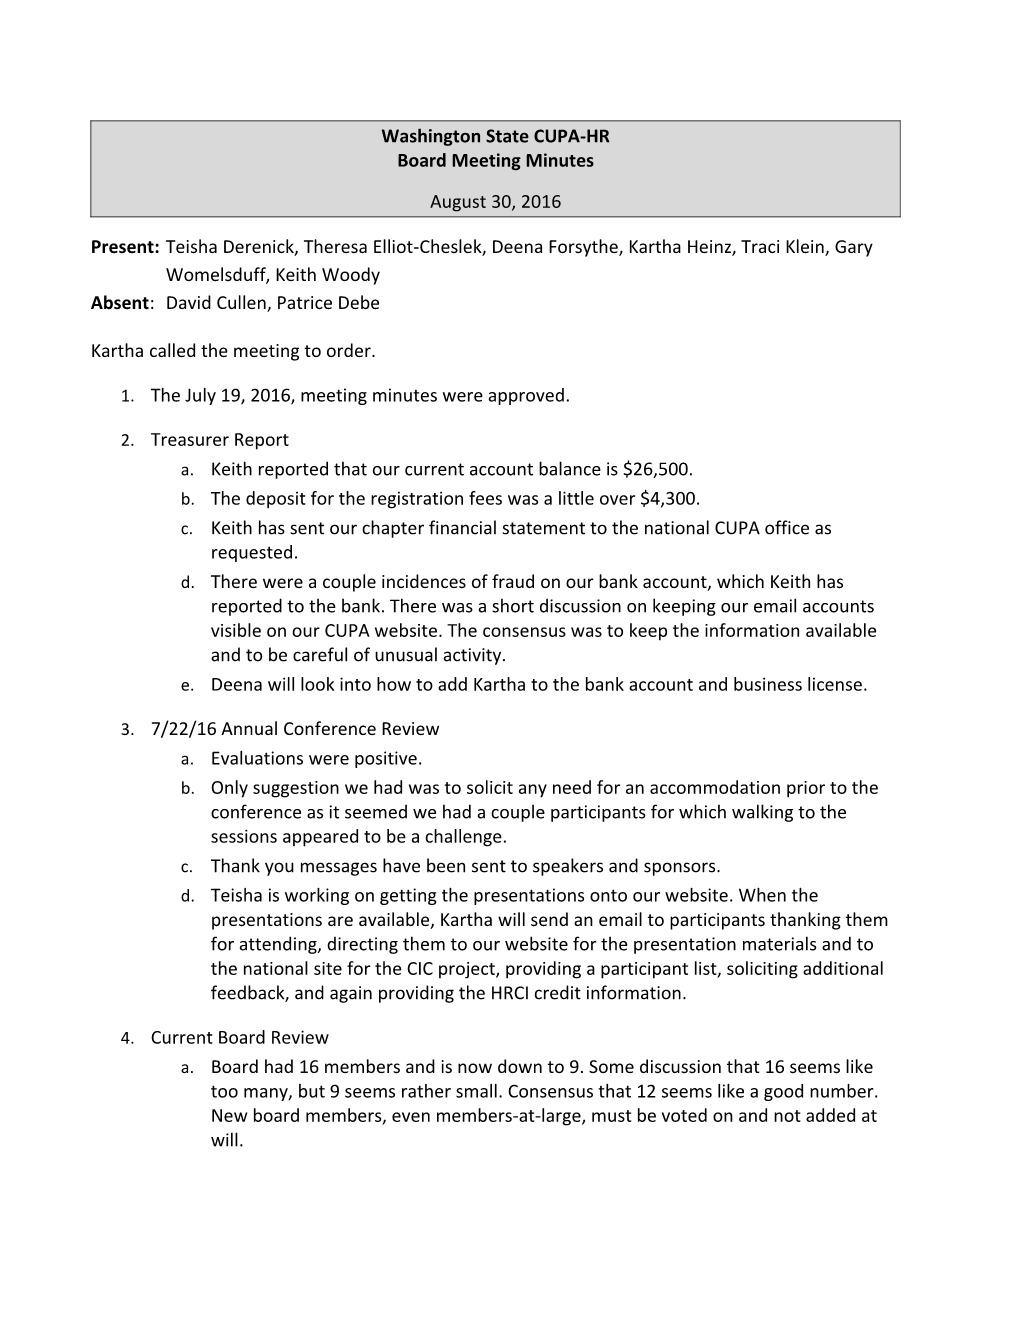 Washington State CUPA-HR Board Meeting Minutes